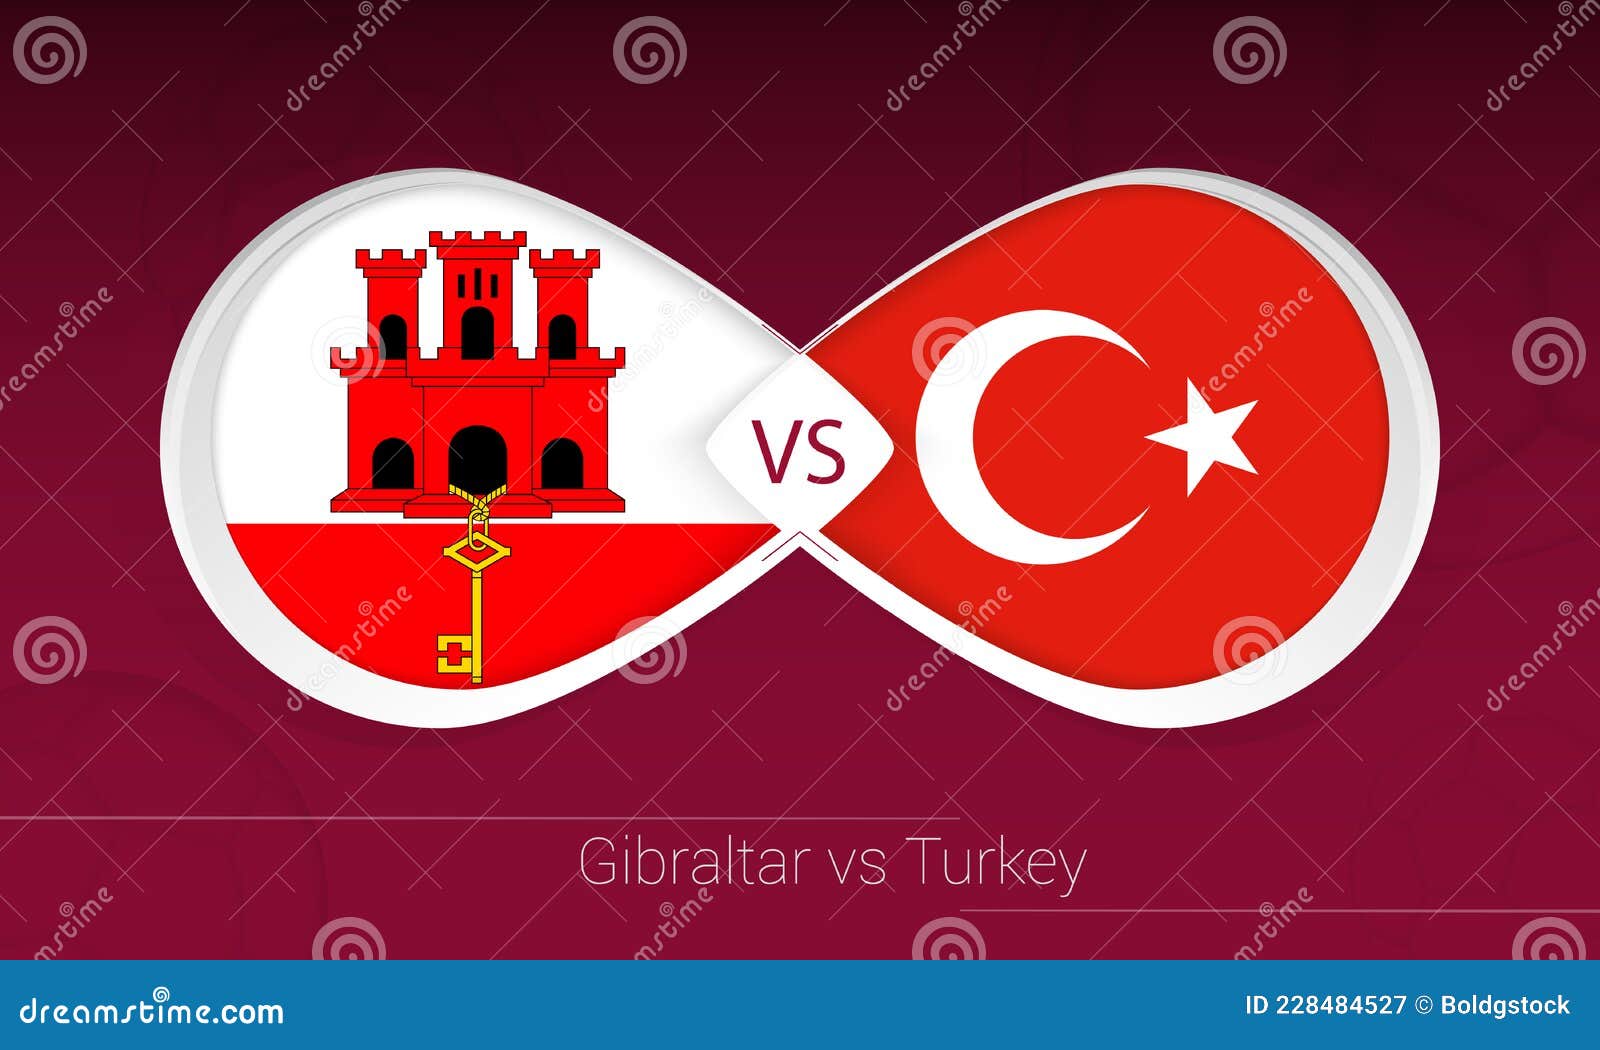 Turkey vs gibraltar